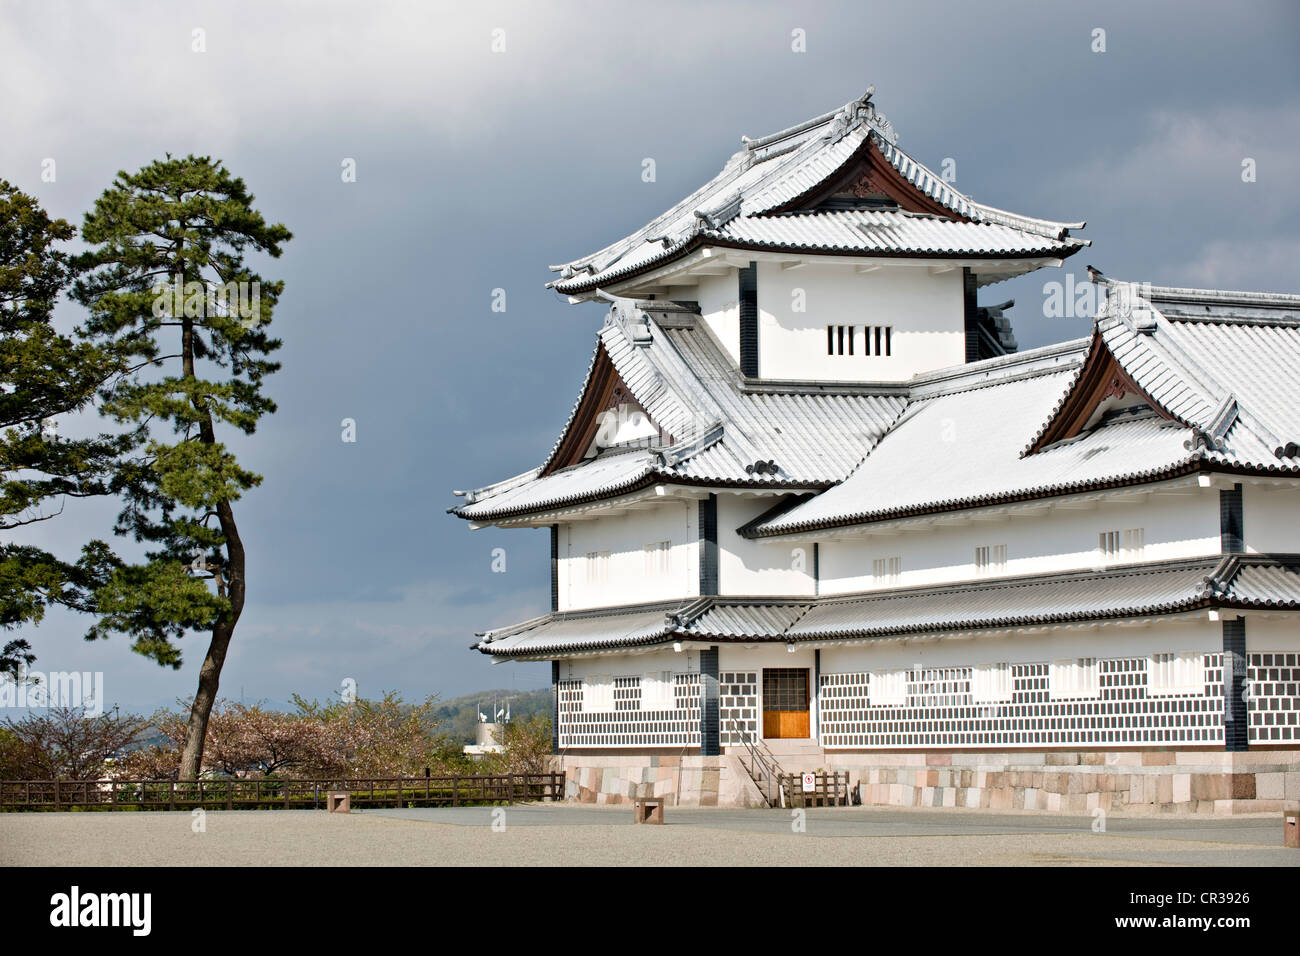 Japan, Insel Honshu, Chubu Region, Kanazawa, die Burg Stockfoto